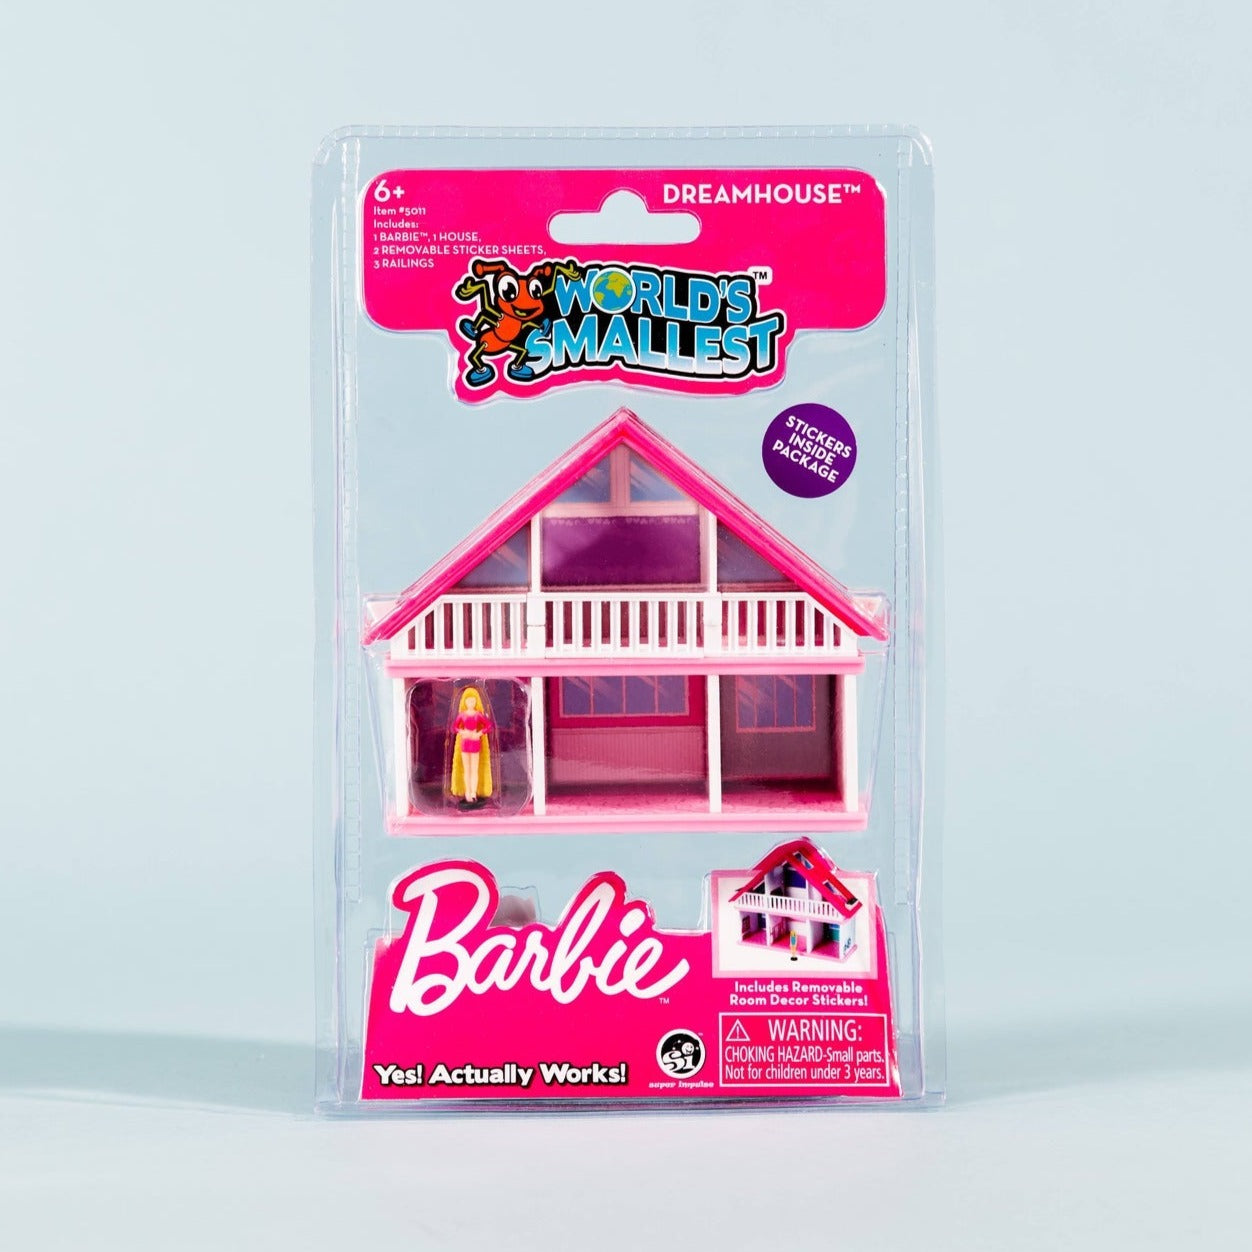 World's Smallest | Malibu Barbie Dreamhouse